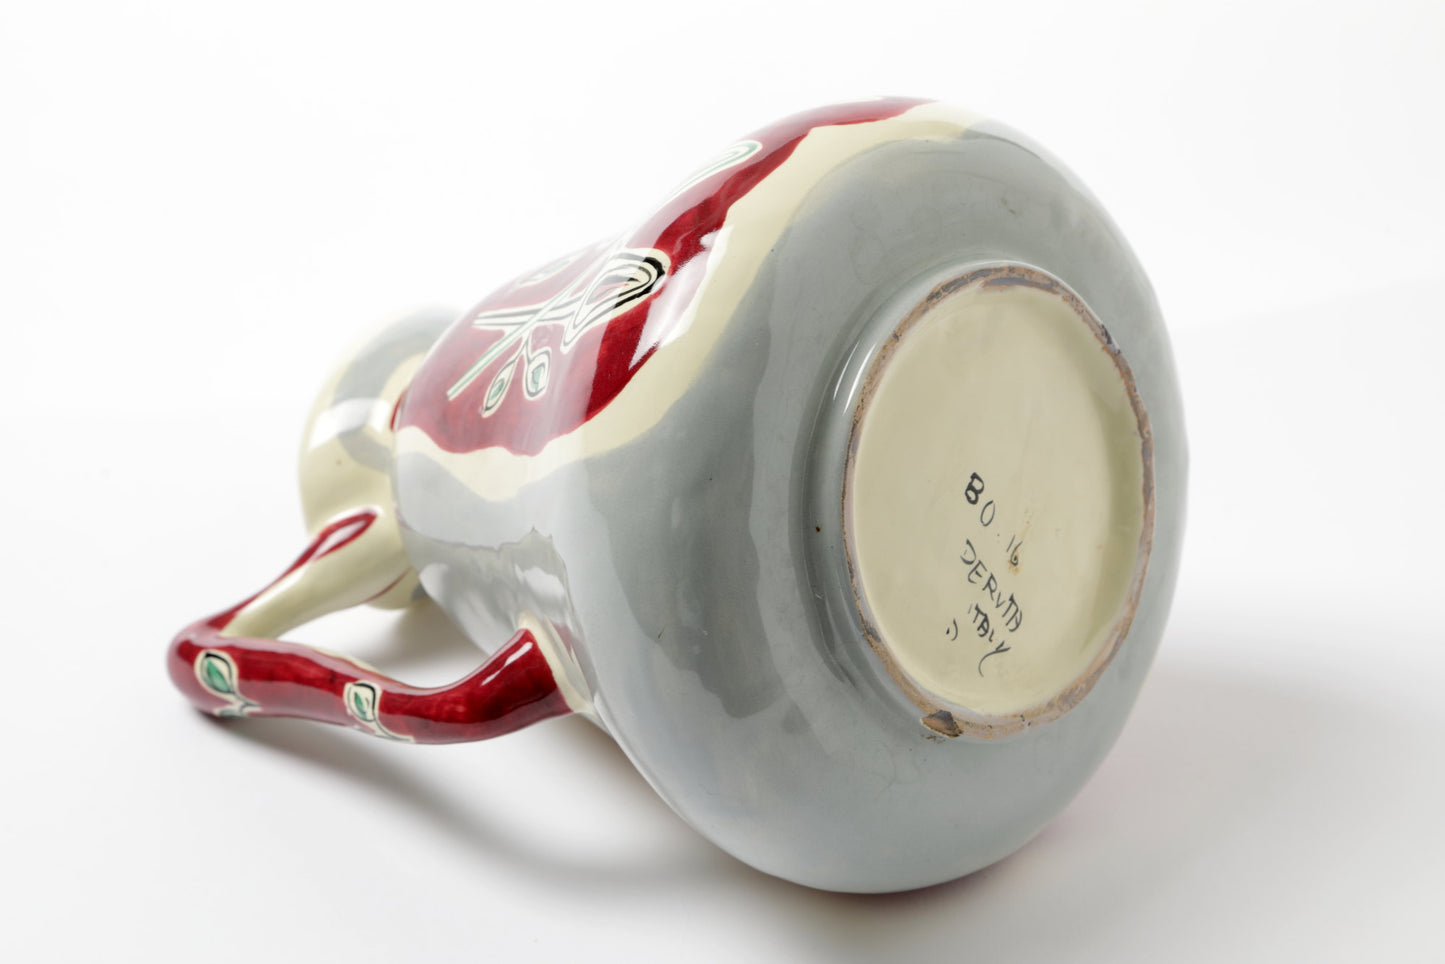 Deruta ceramic pitcher from the 1950s